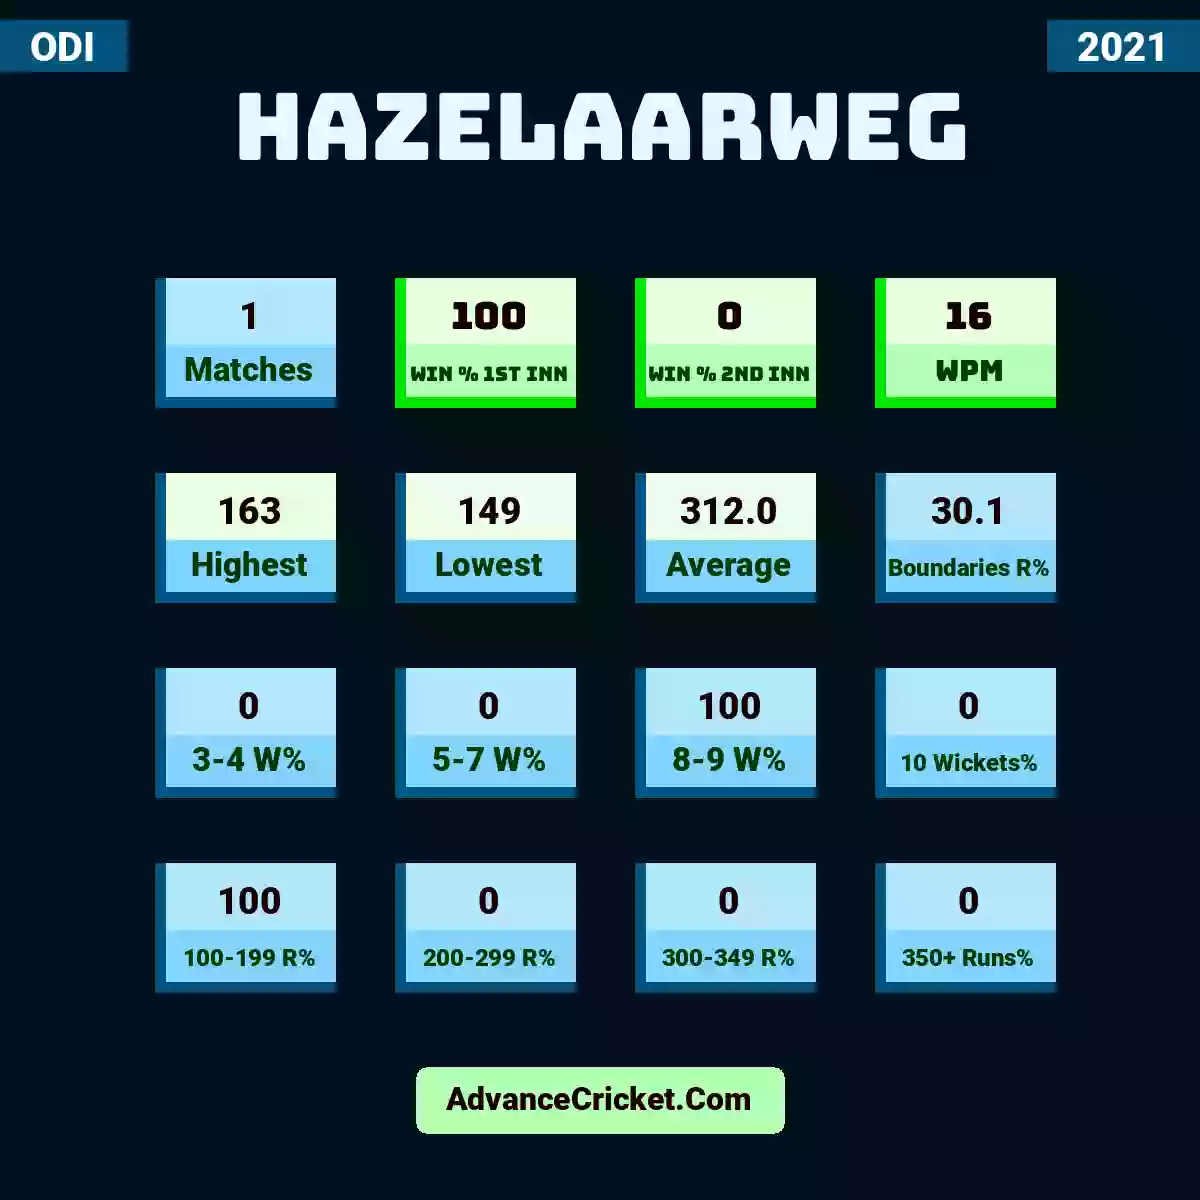 Image showing Hazelaarweg with Matches: 1, Win % 1st Inn: 100, Win % 2nd Inn: 0, WPM: 16, Highest: 163, Lowest: 149, Average: 312.0, Boundaries R%: 30.1, 3-4 W%: 0, 5-7 W%: 0, 8-9 W%: 100, 10 Wickets%: 0, 100-199 R%: 100, 200-299 R%: 0, 300-349 R%: 0, 350+ Runs%: 0.